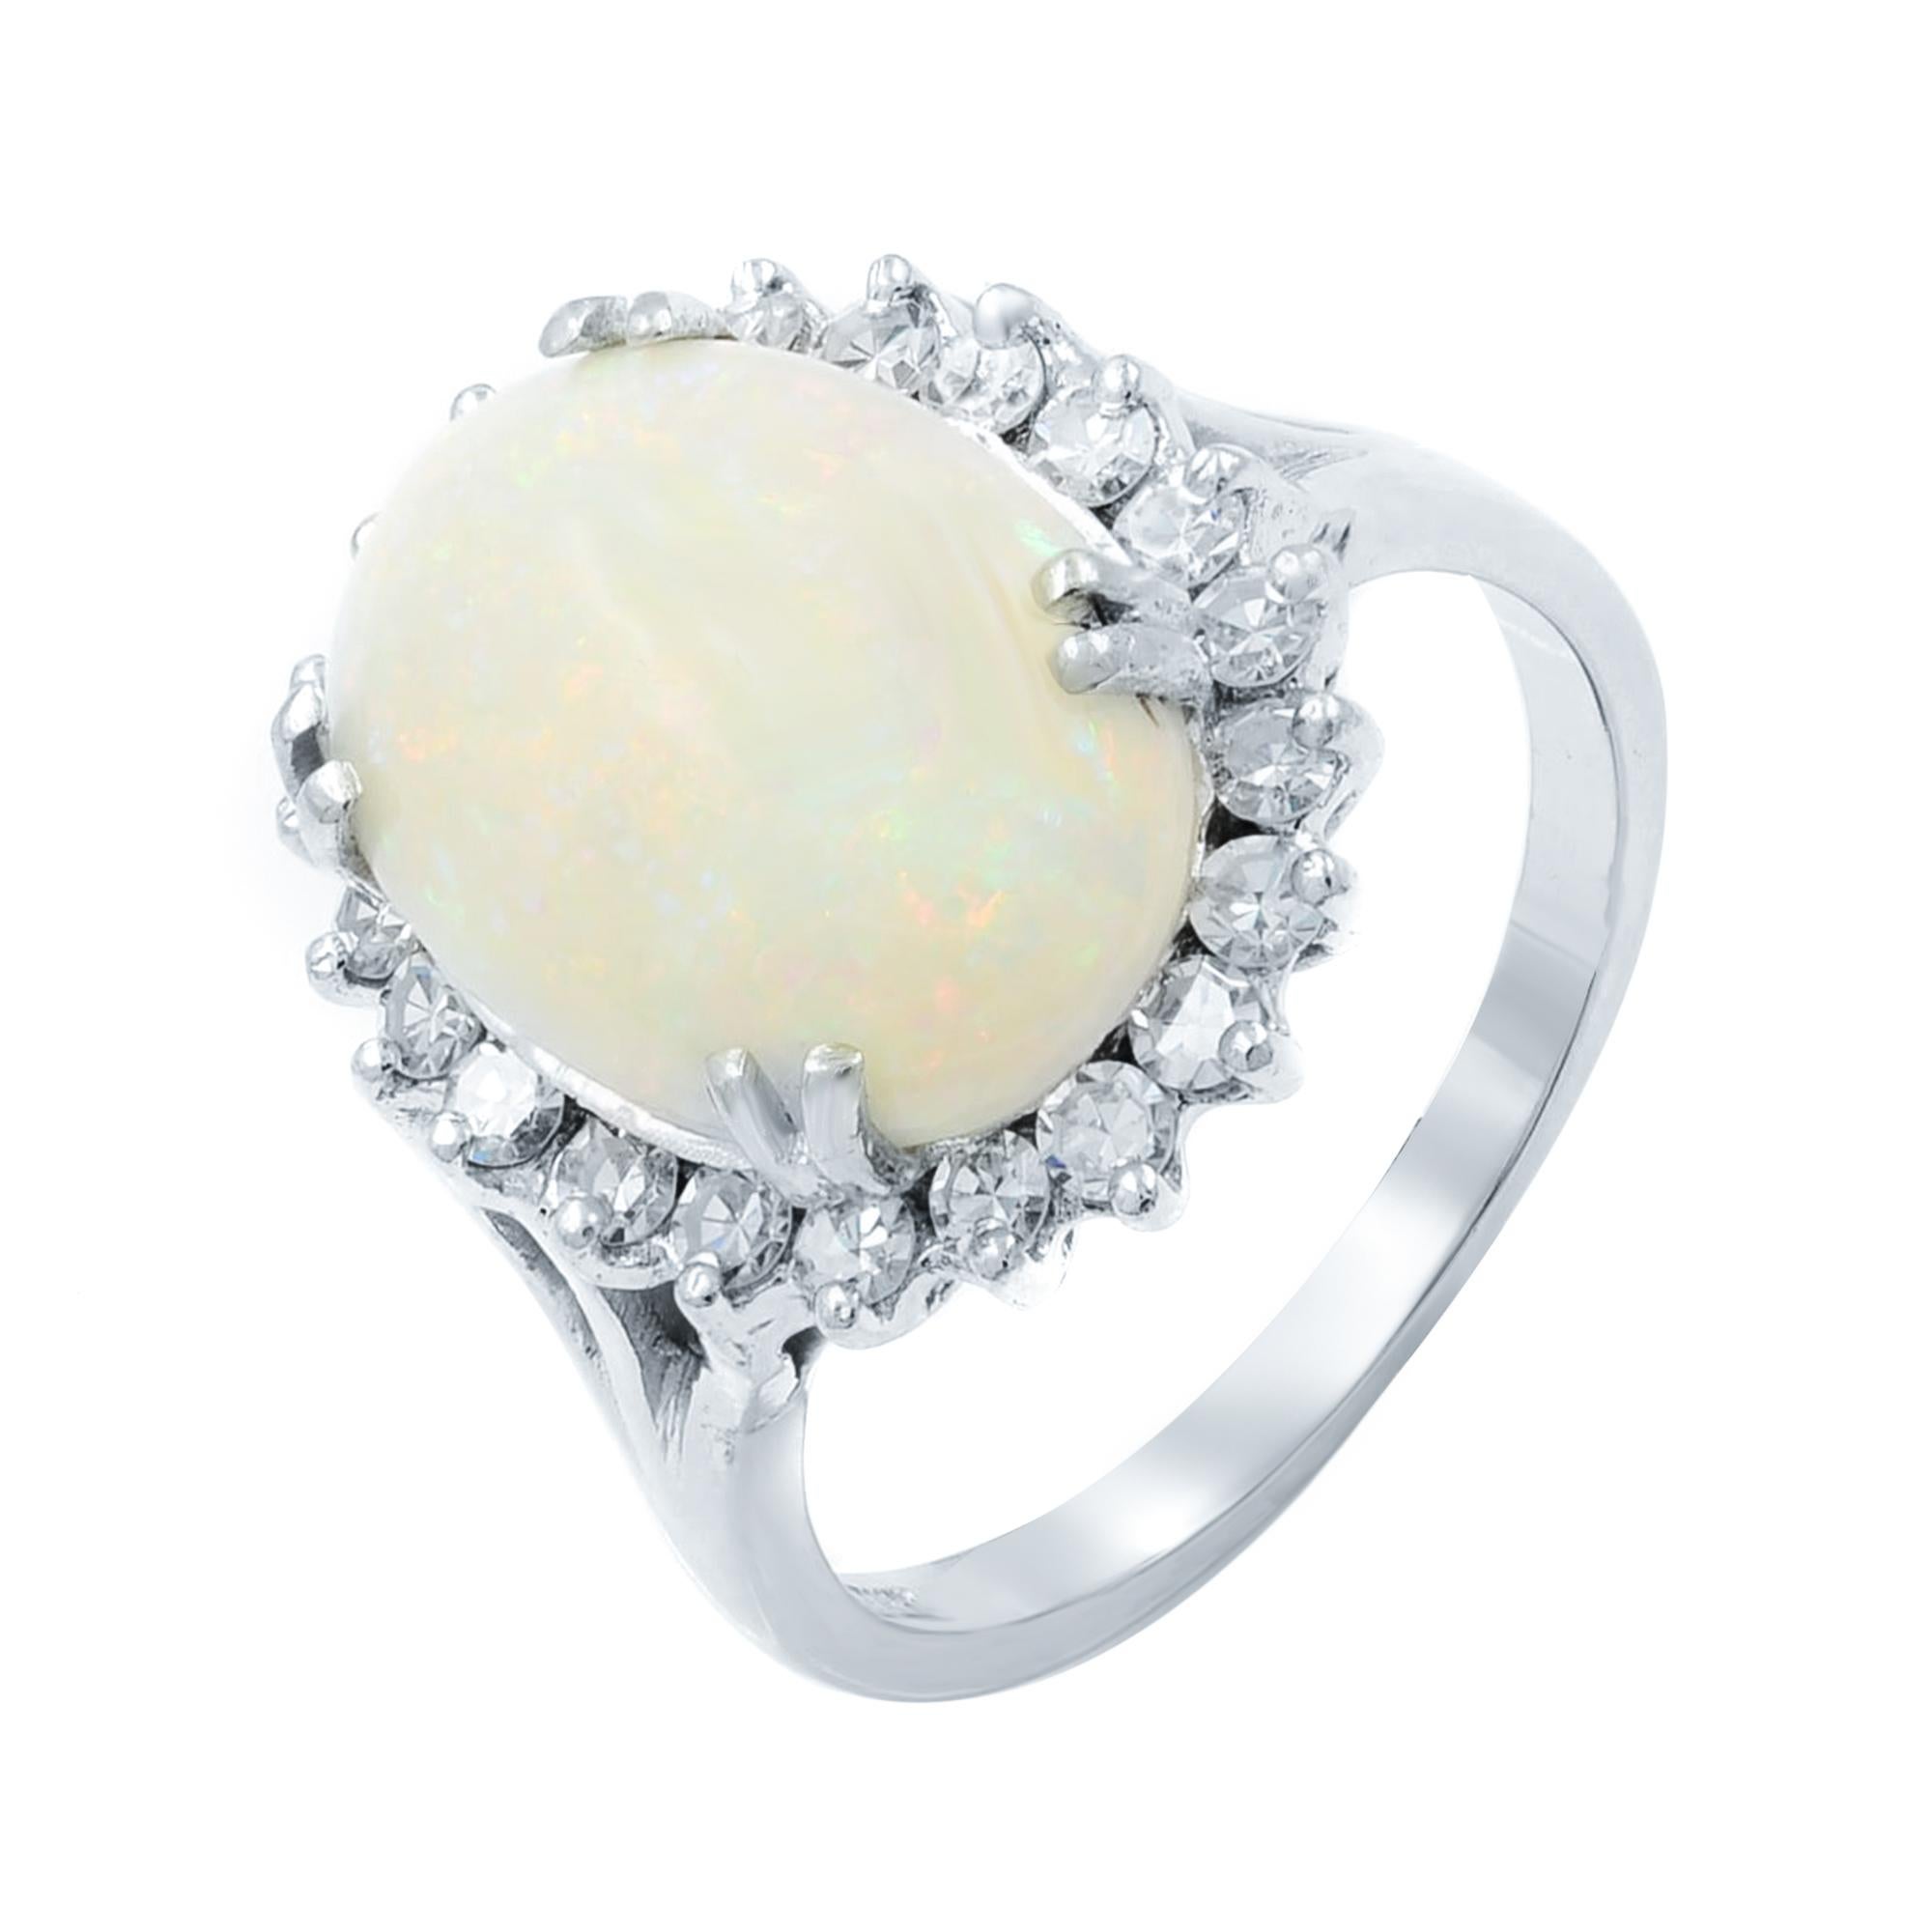 This fabulous 3.40 carats opal just screams 